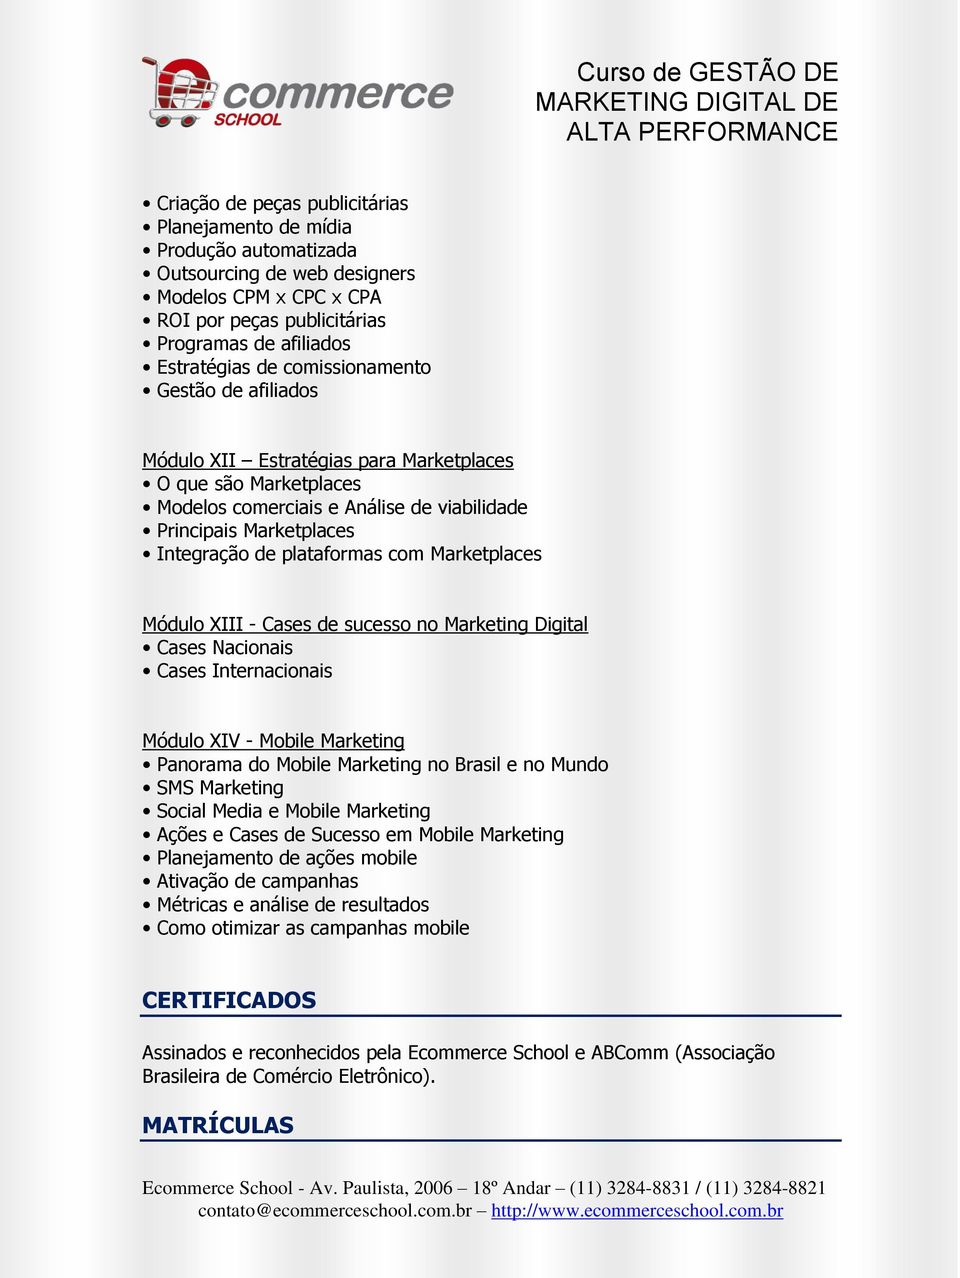 Marketplaces Módulo XIII - Cases de sucesso no Marketing Digital Cases Nacionais Cases Internacionais Módulo XIV - Mobile Marketing Panorama do Mobile Marketing no Brasil e no Mundo SMS Marketing